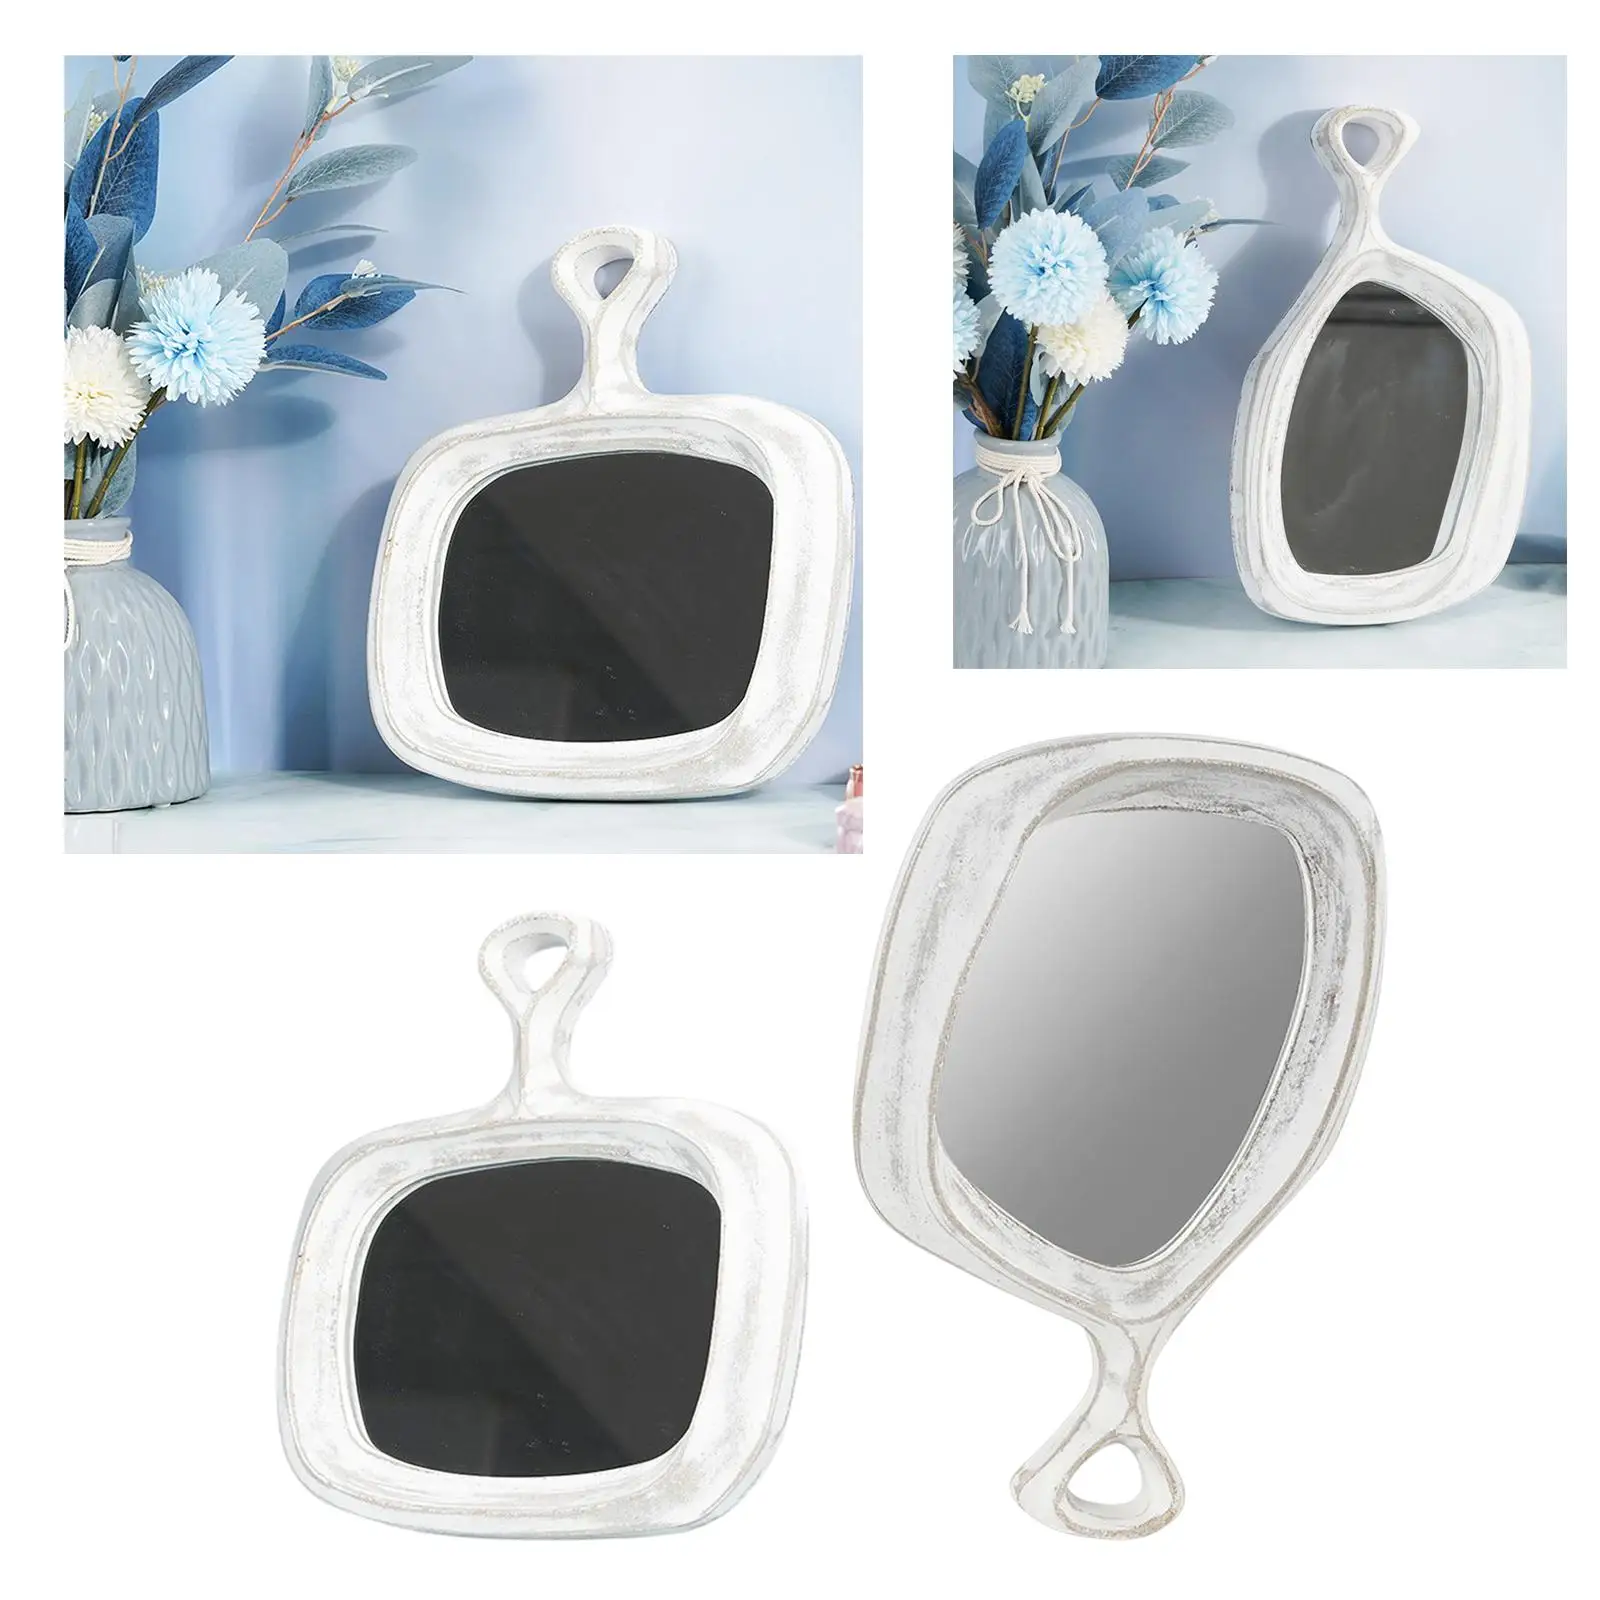 Makeup Mirror Women Gift Desktop Mirror Wooden Frame for Living Room